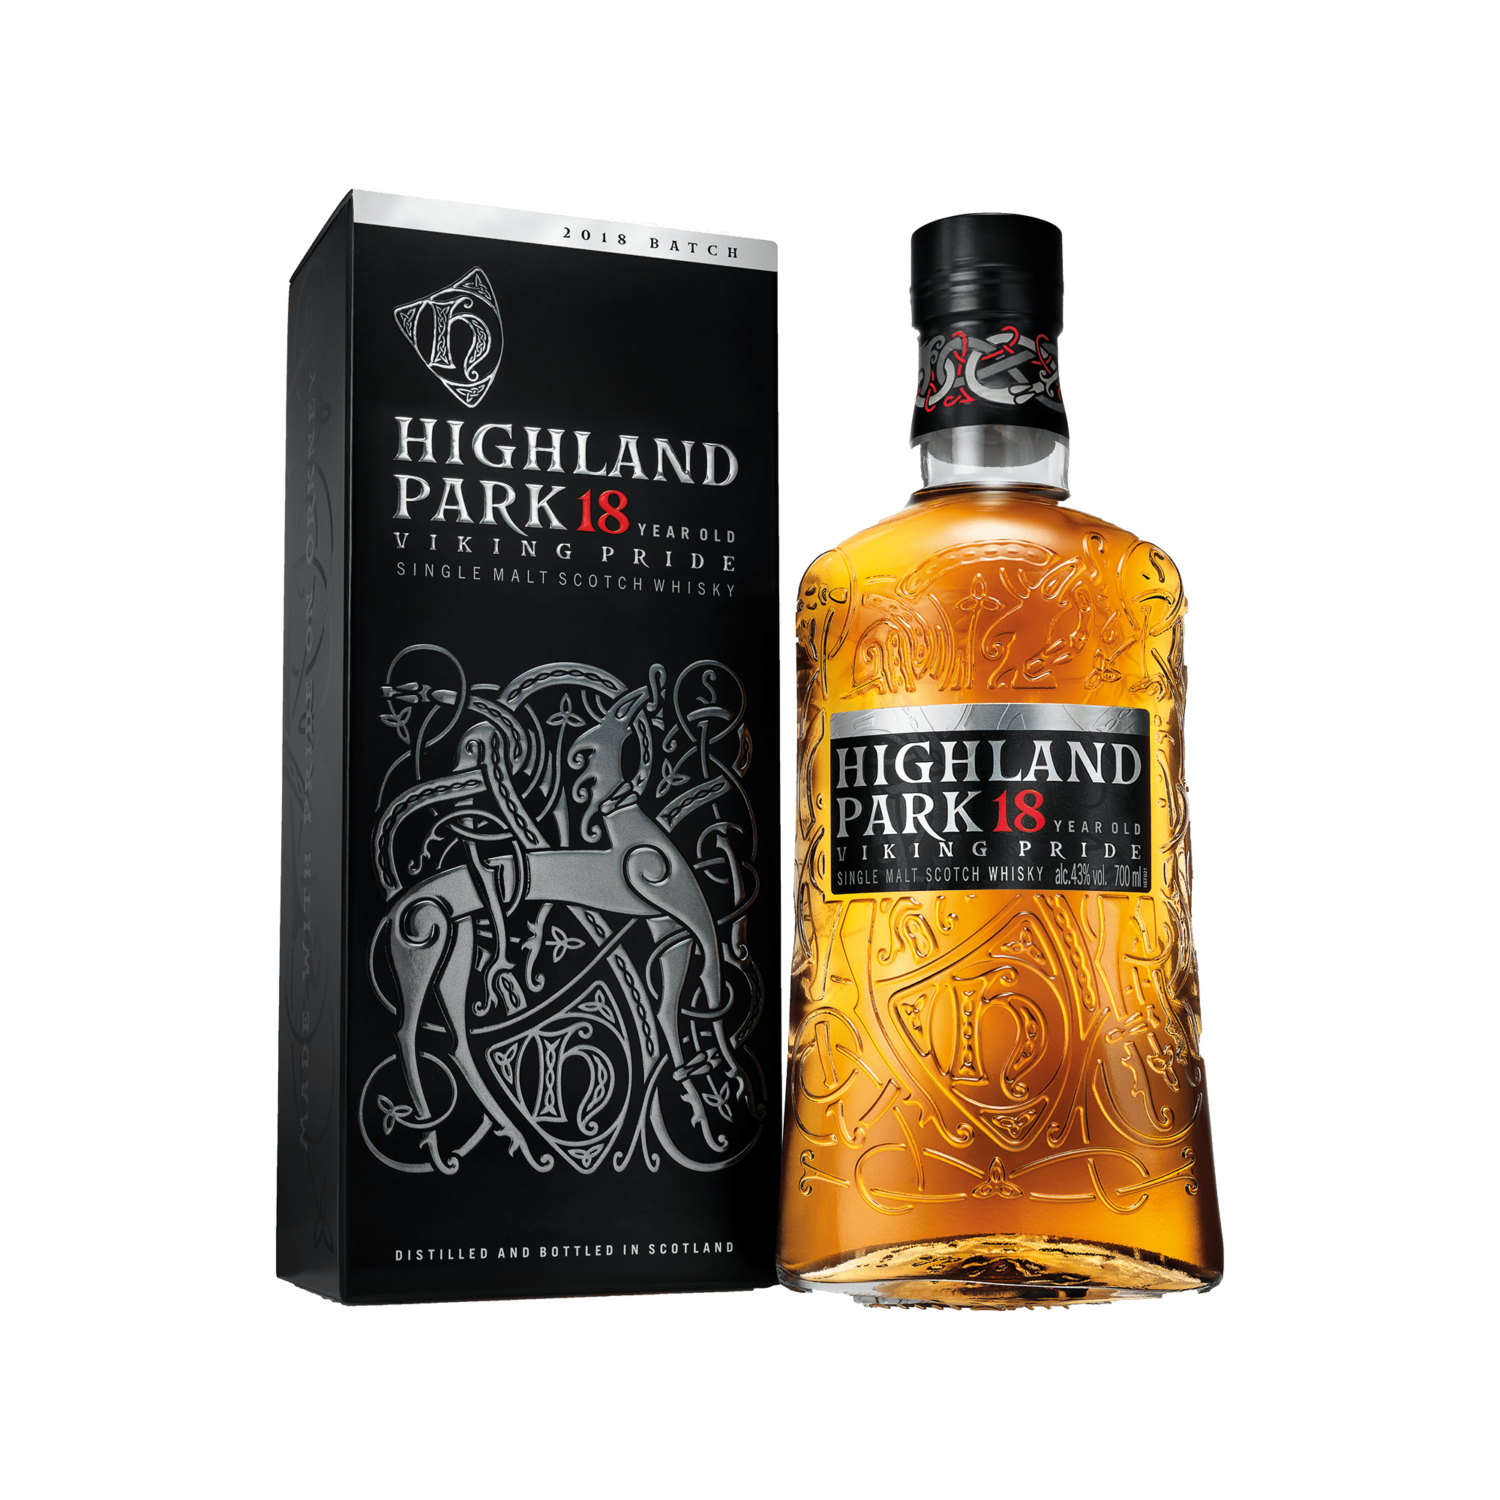 Highland Park 18 Years viking pride - 70cl